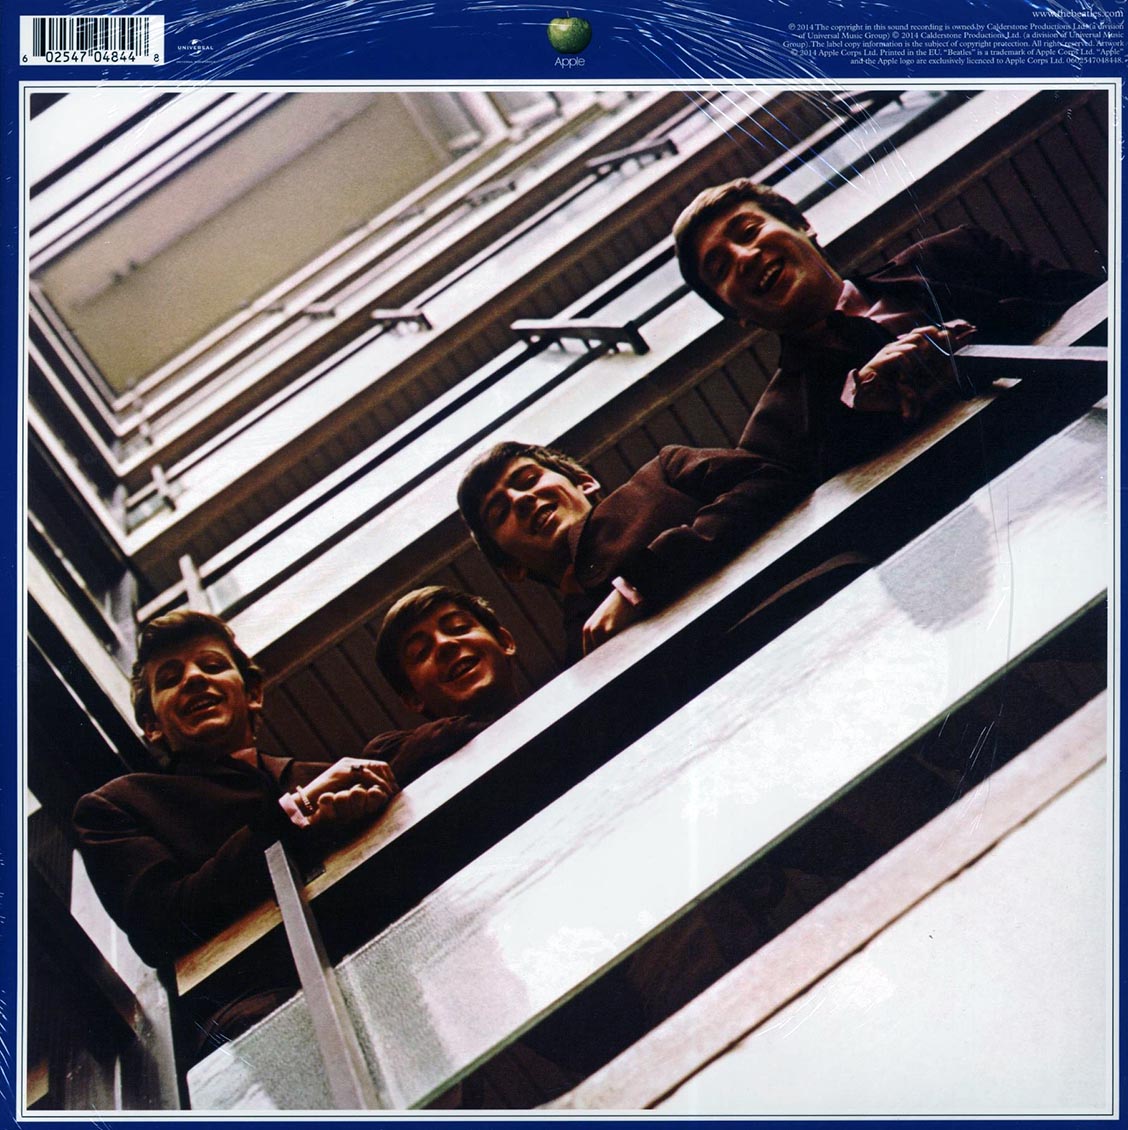 The Beatles - 1967-1970 (The Blue Album) [2014 Remastered 180G] [New Double Vinyl Record LP]